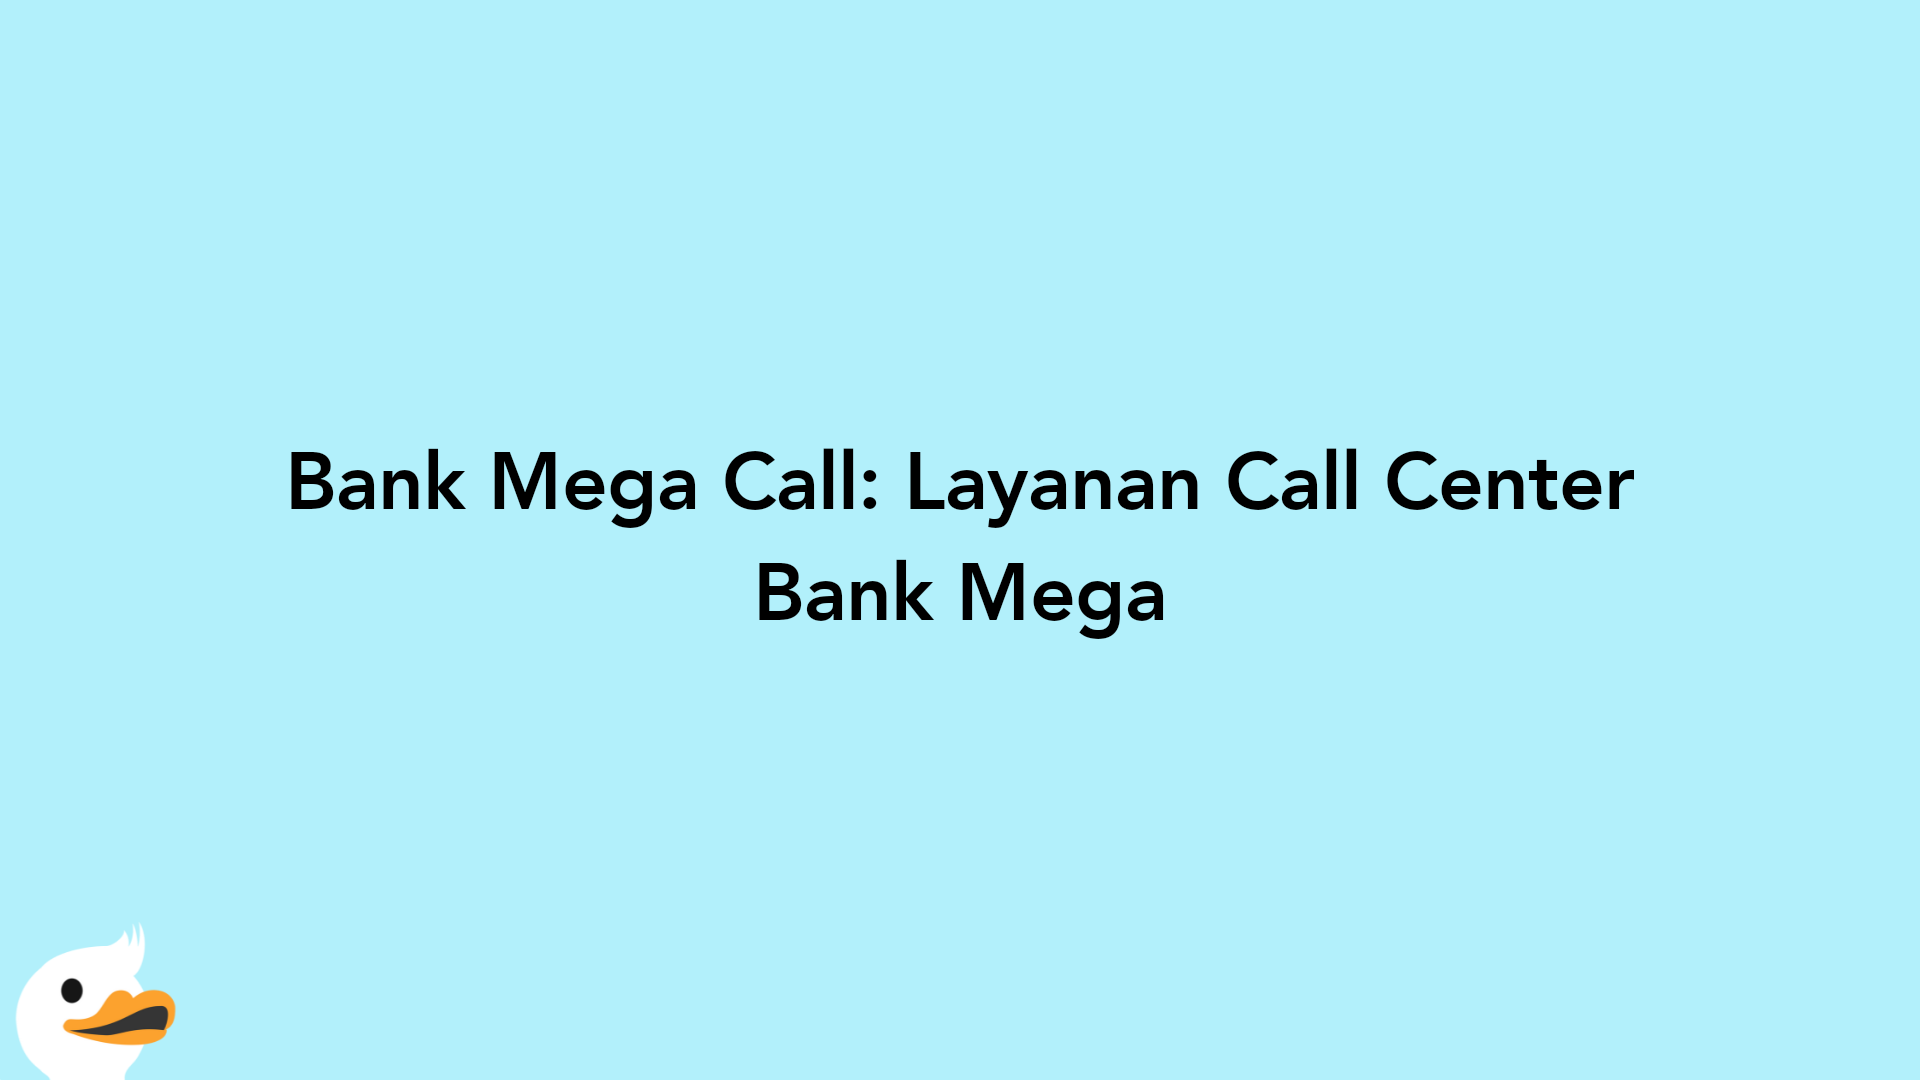 Bank Mega Call: Layanan Call Center Bank Mega